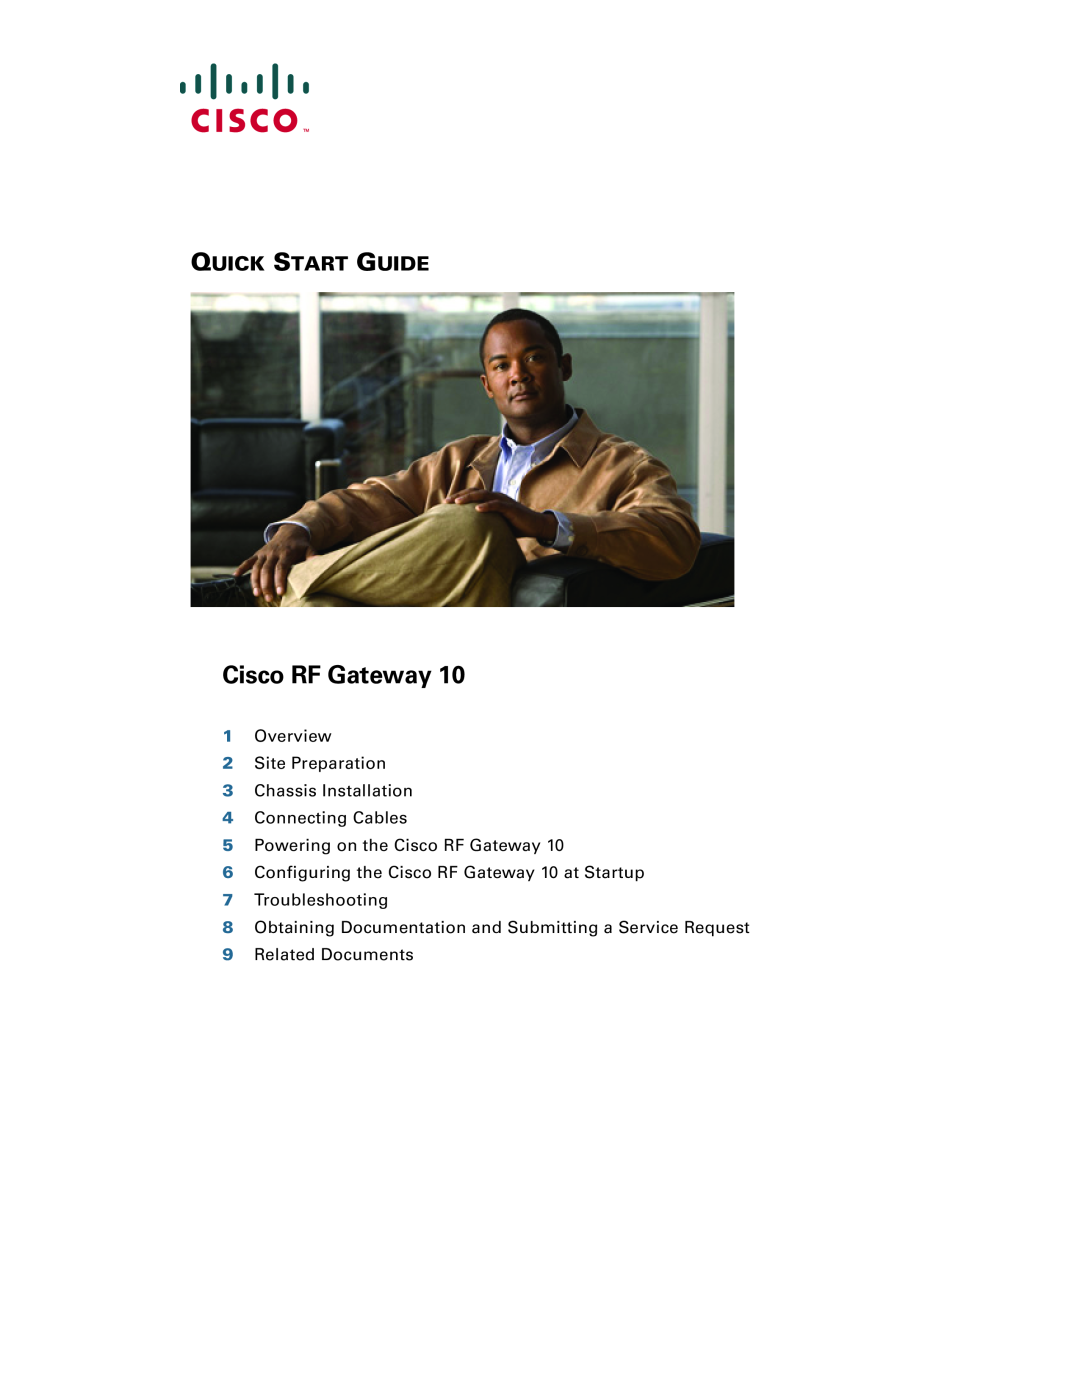 Cisco Systems Gateway 10 quick start Cisco RF Gateway, Quick Start Guide, Related Documents 